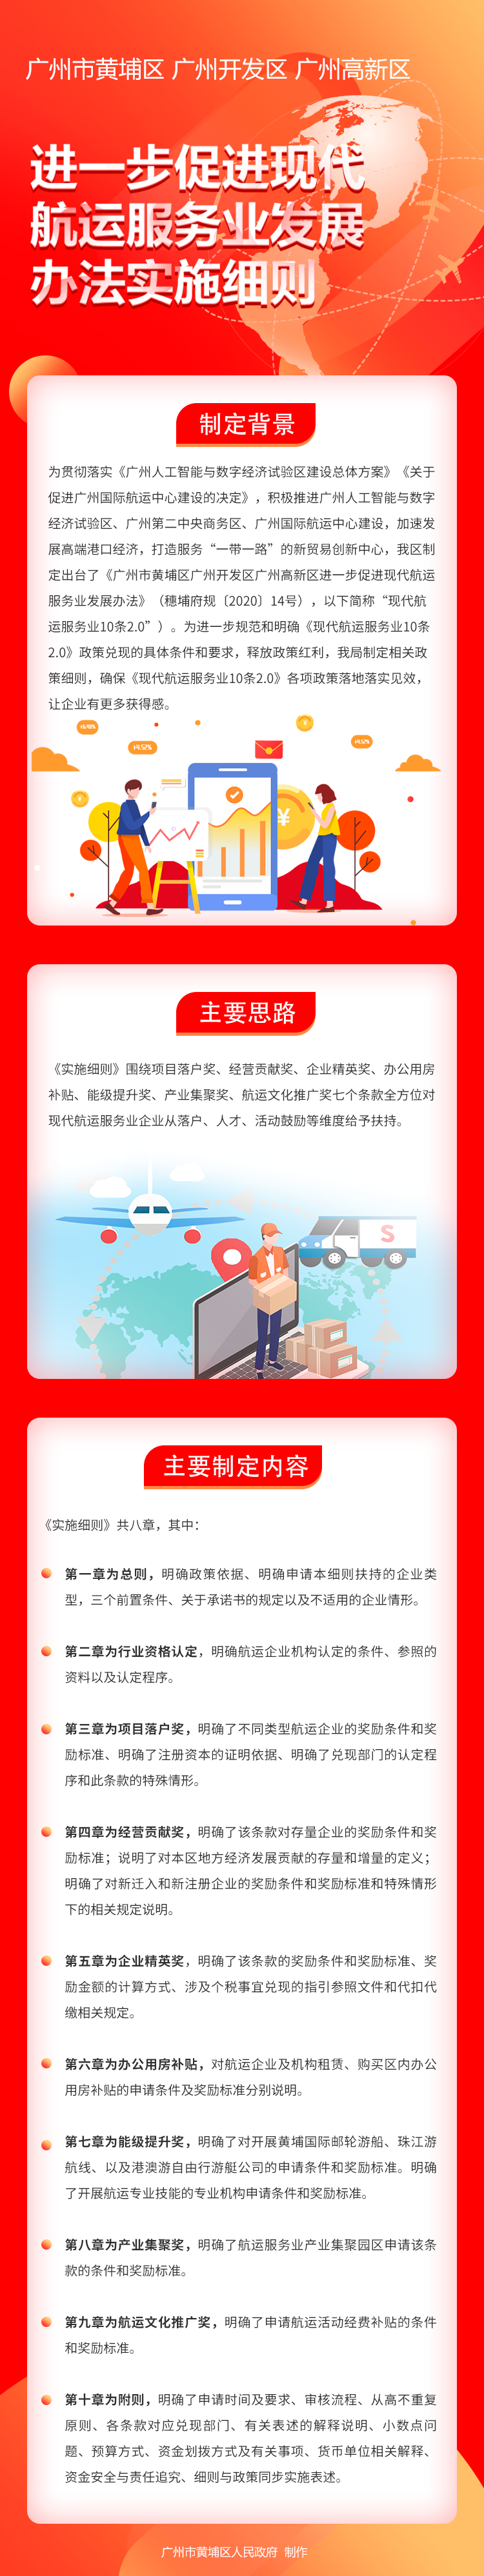 jing-进一步促进现代航运服务业发展办法实施细则(2).png